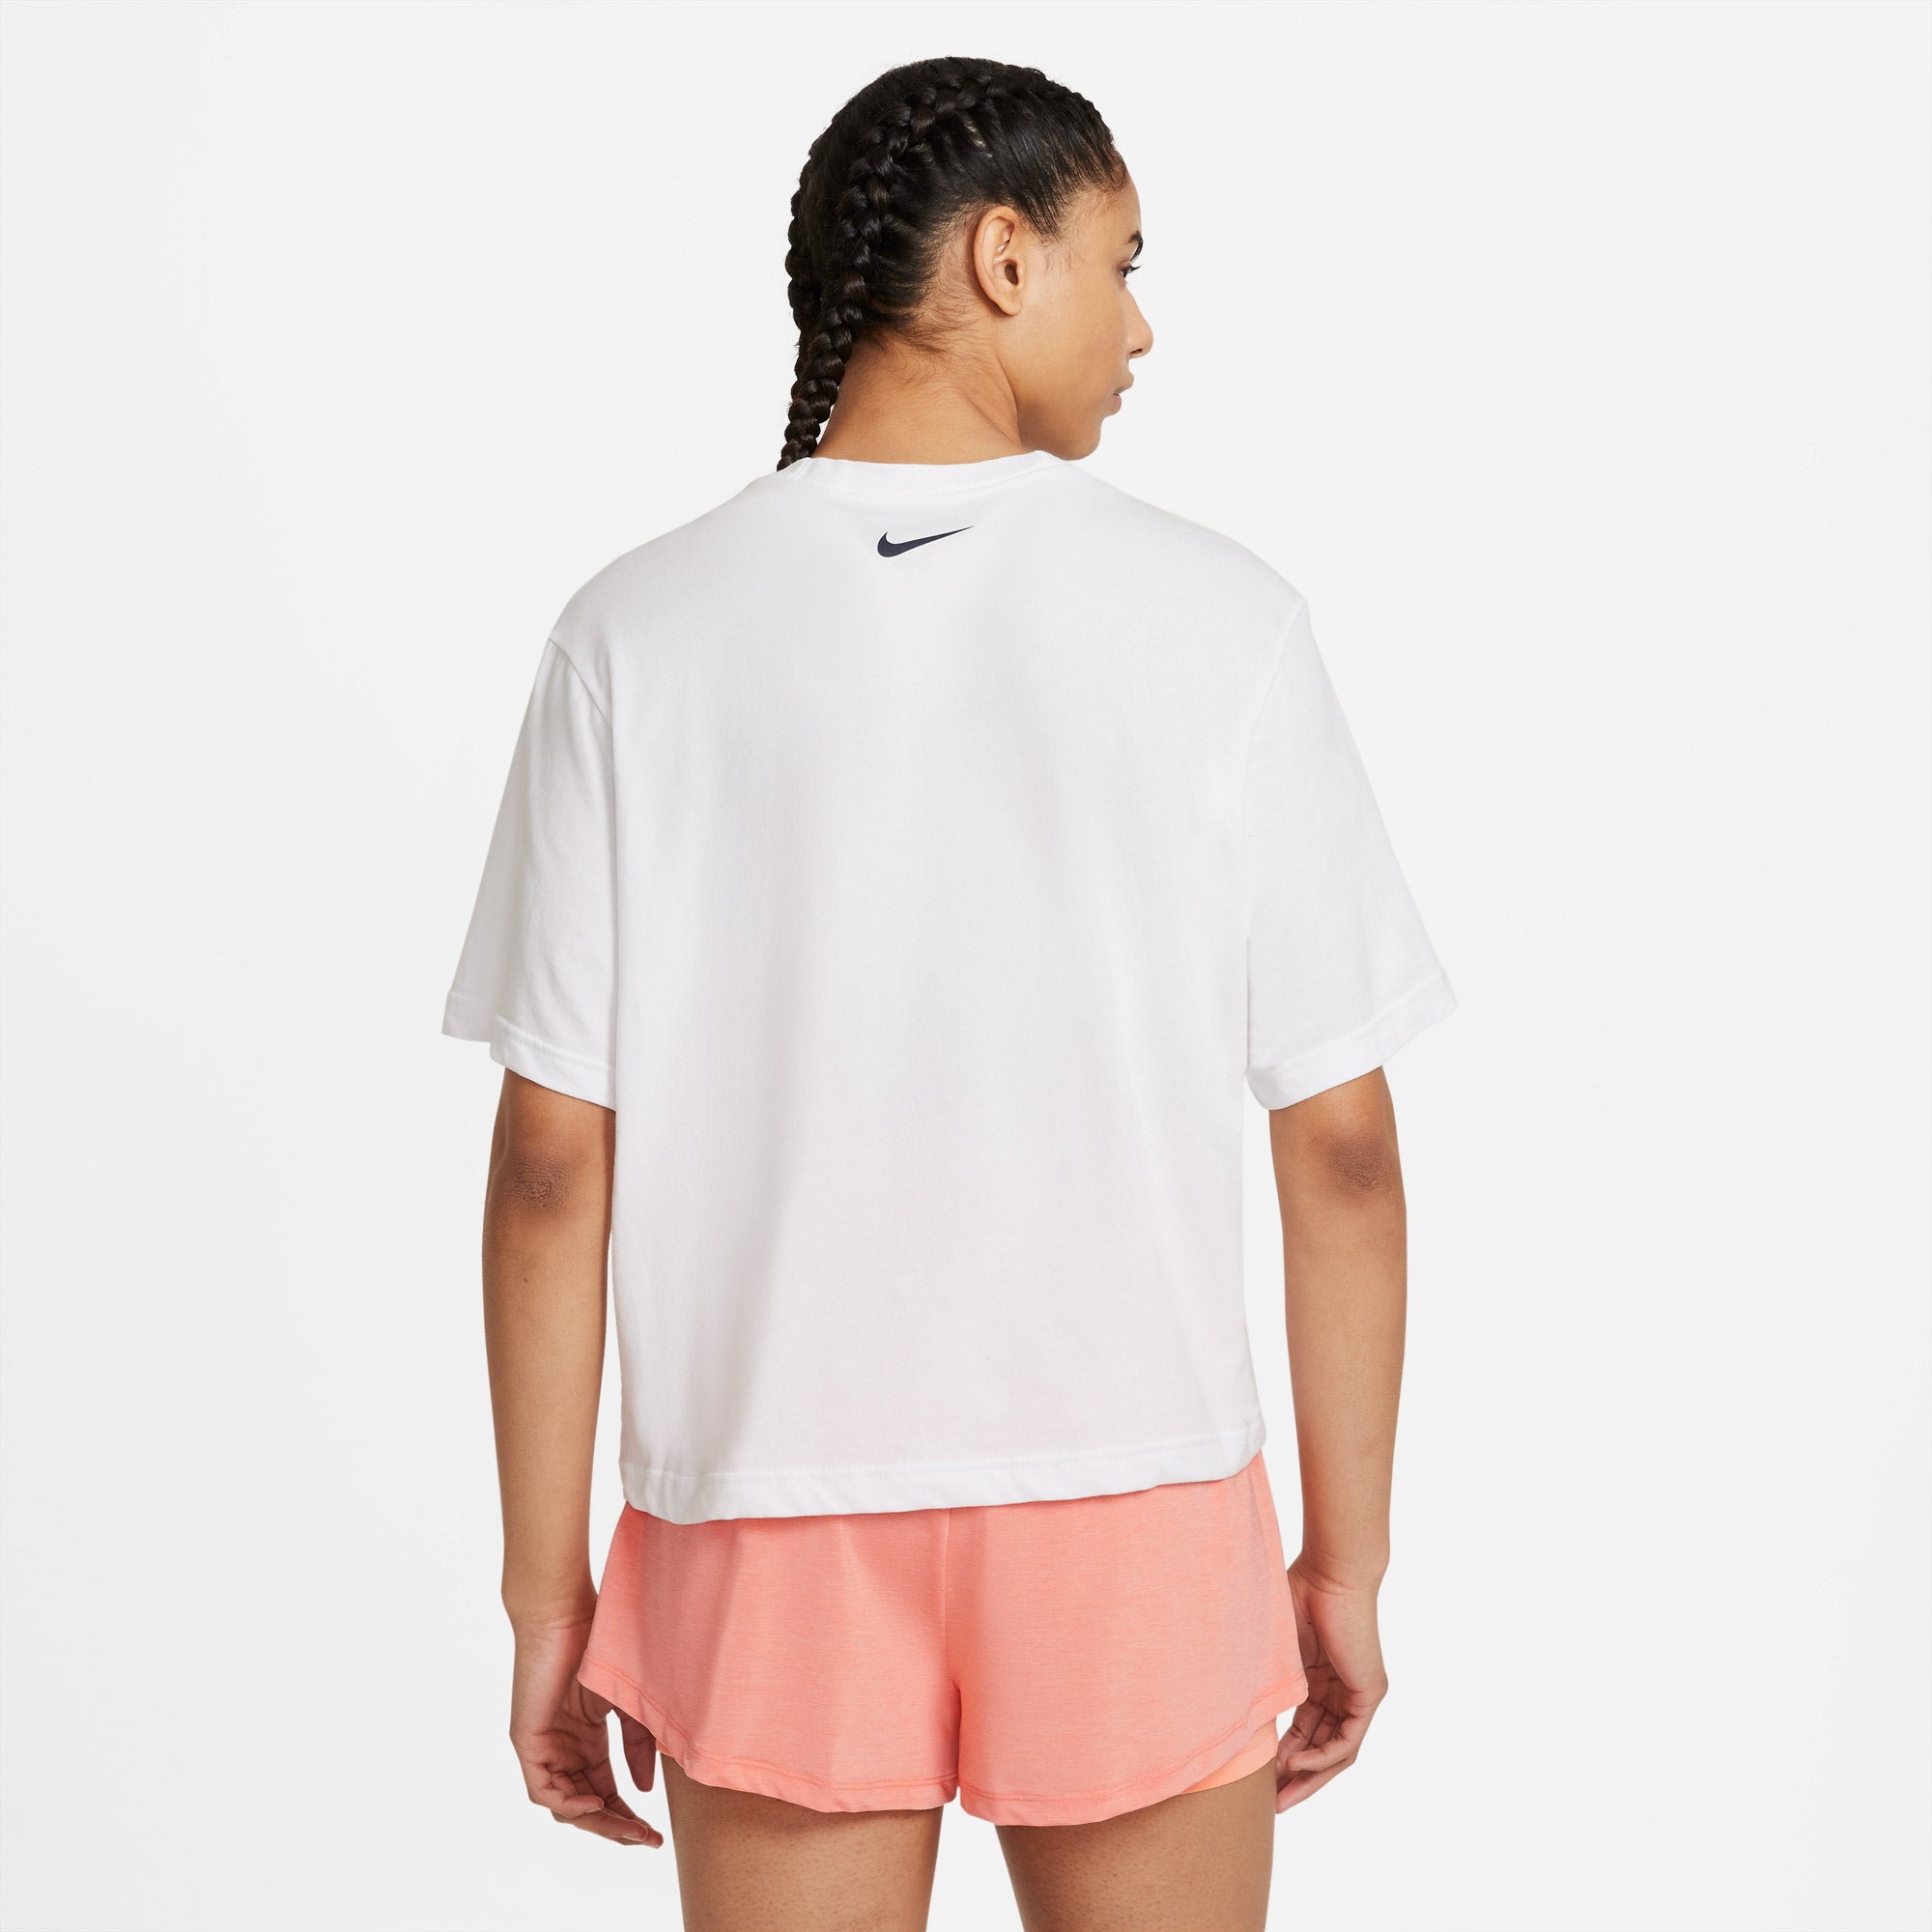 Nike Dri-FIT Women's Graphic Tennis T-Shirt White (2)